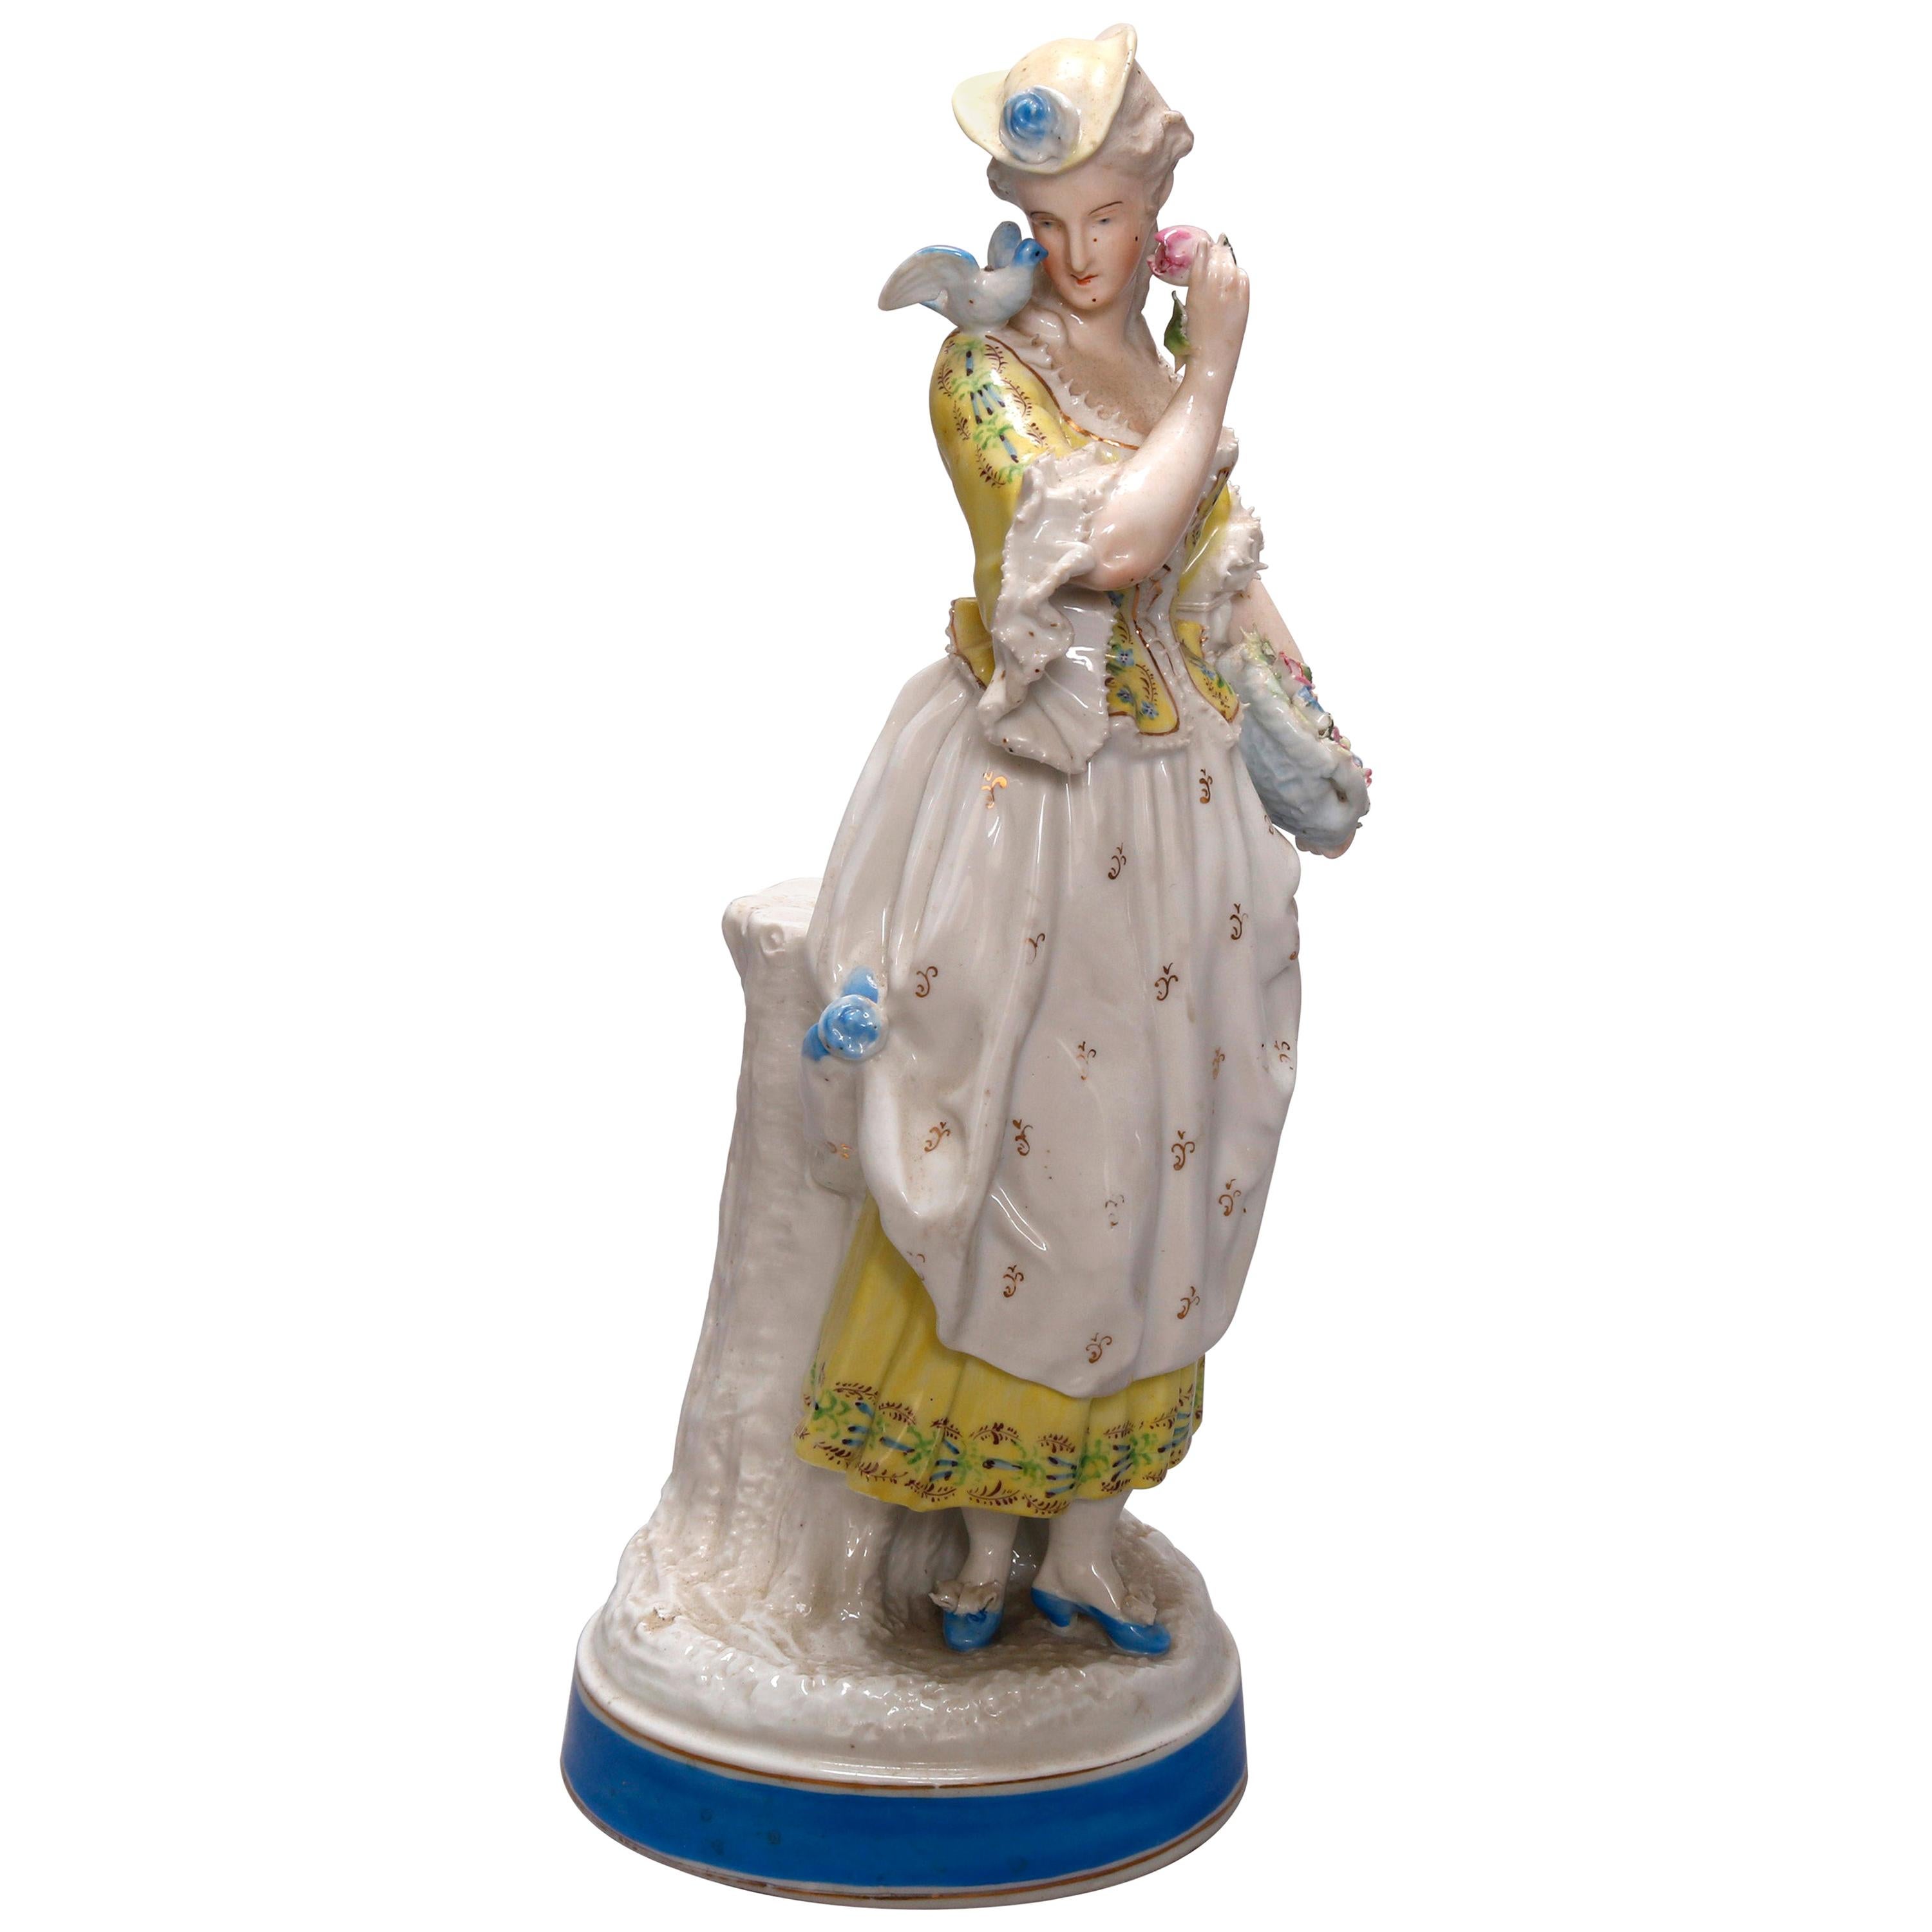 Antique German Hand Painted Meissen School Porcelain Maiden Figure, circa 1900